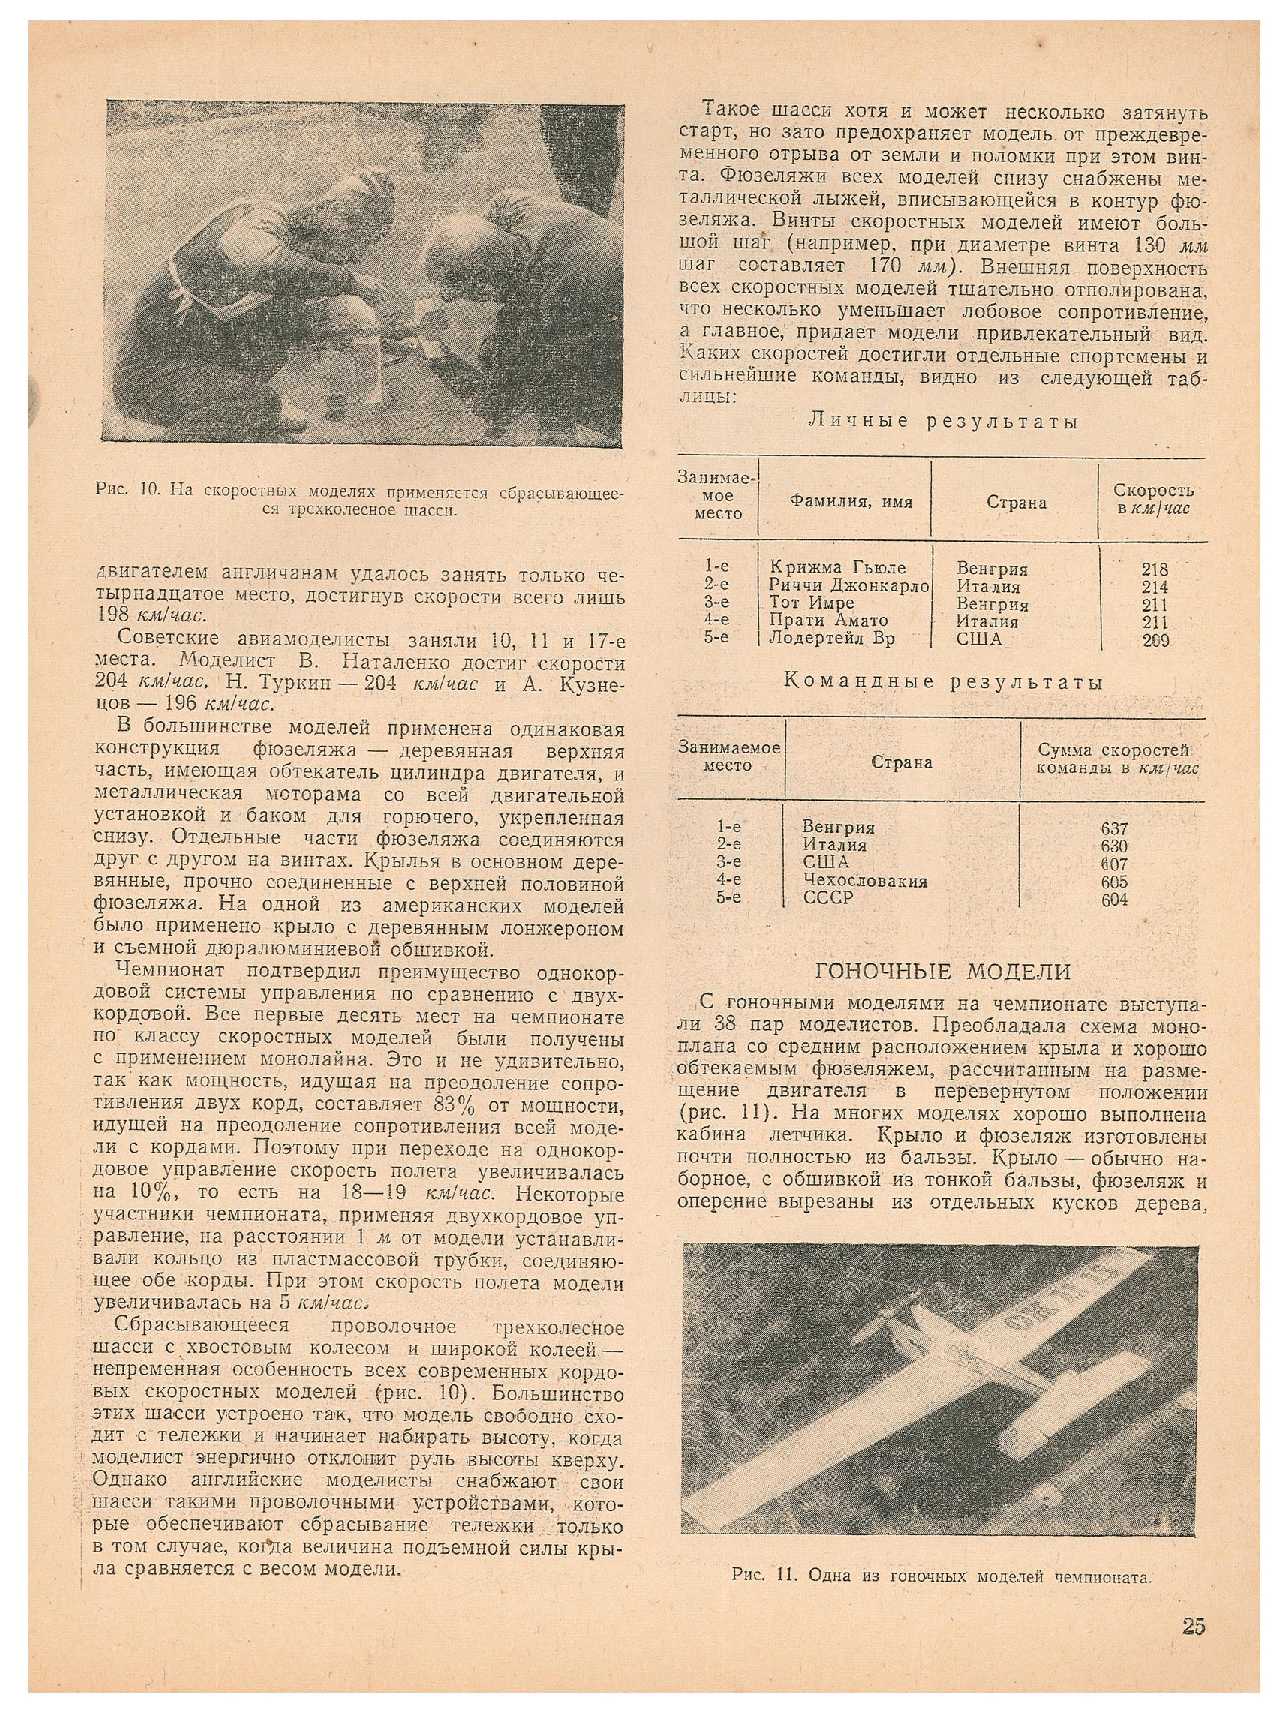 ЮМК 3, 1962, 25 c.